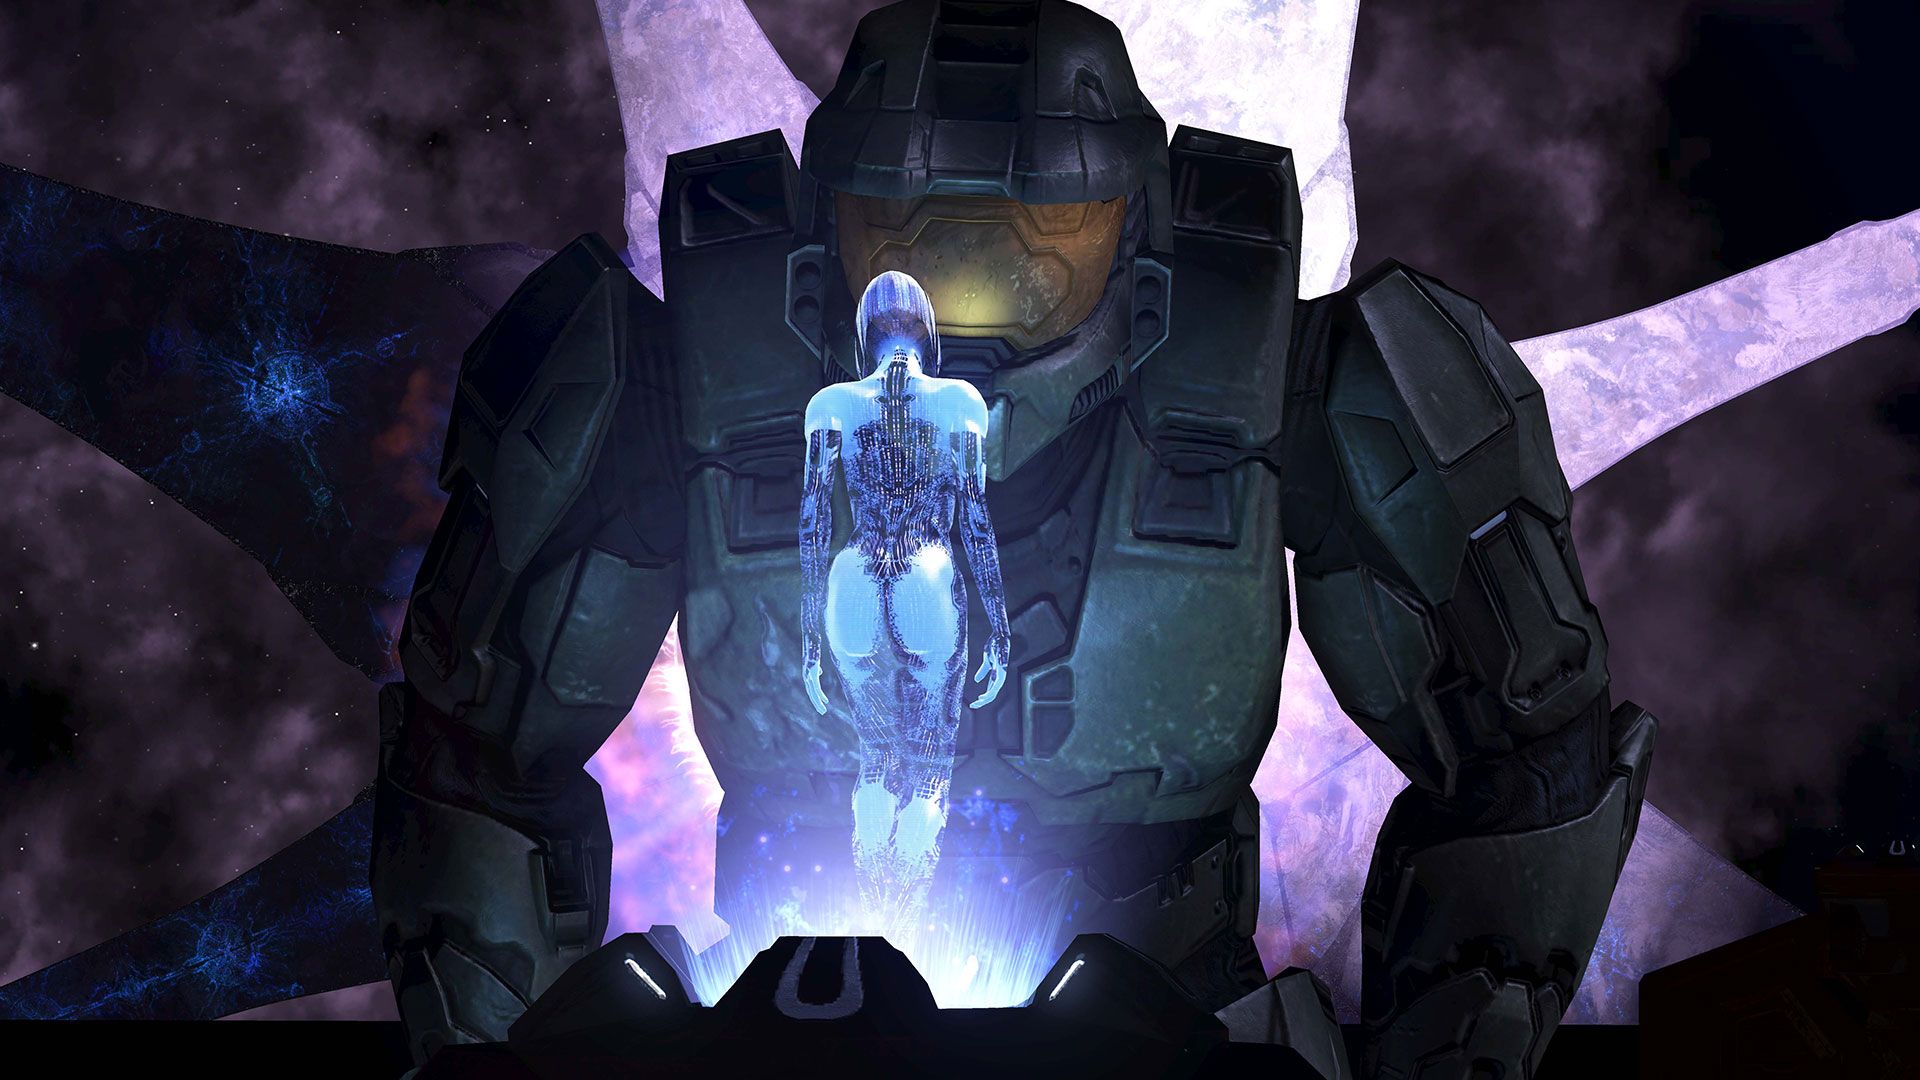 Halo 3 - Master Chief and Cortana